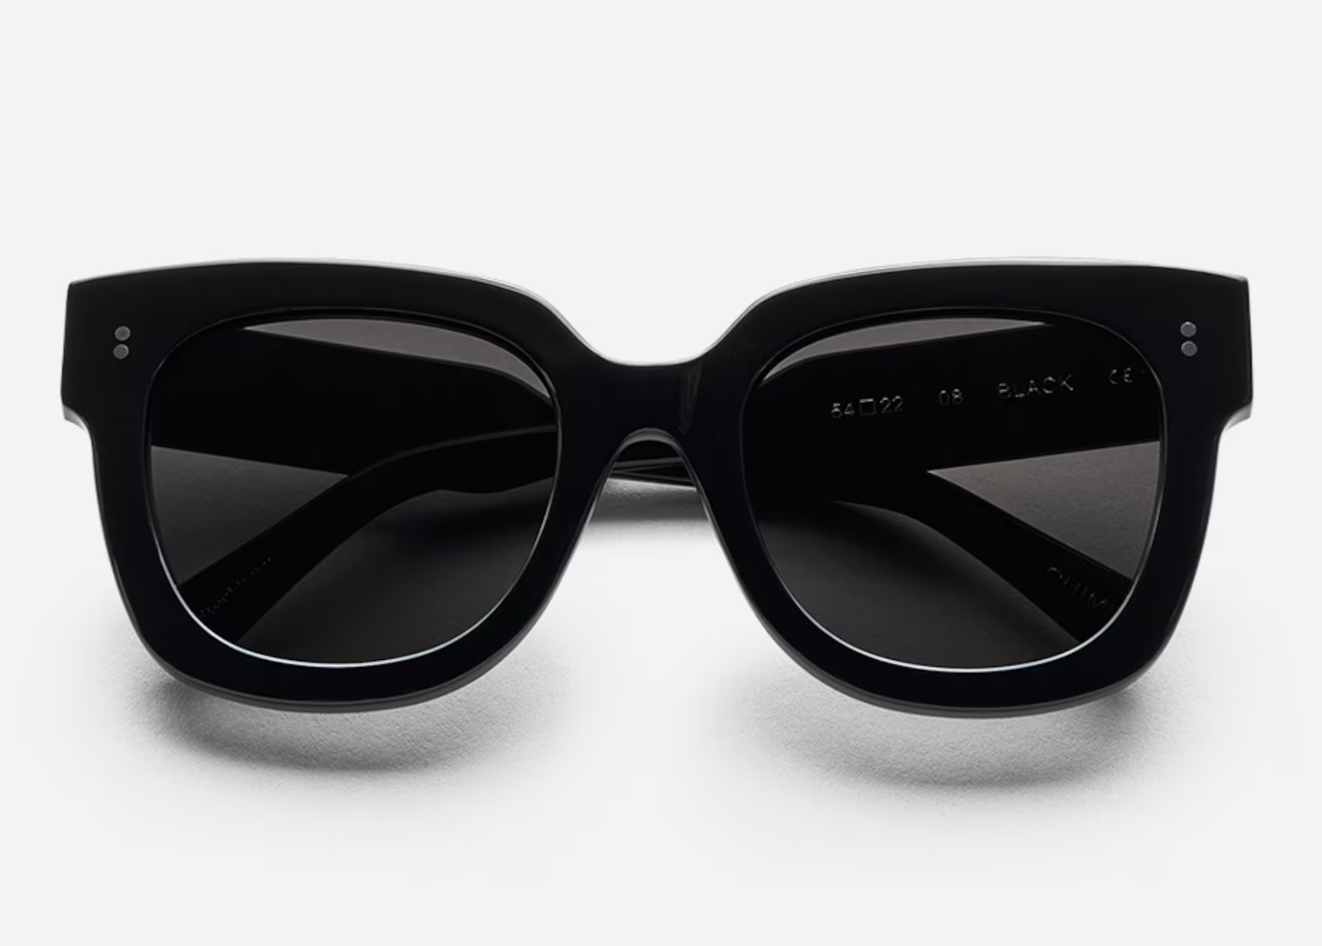 Chimi Eyewear model 08, black